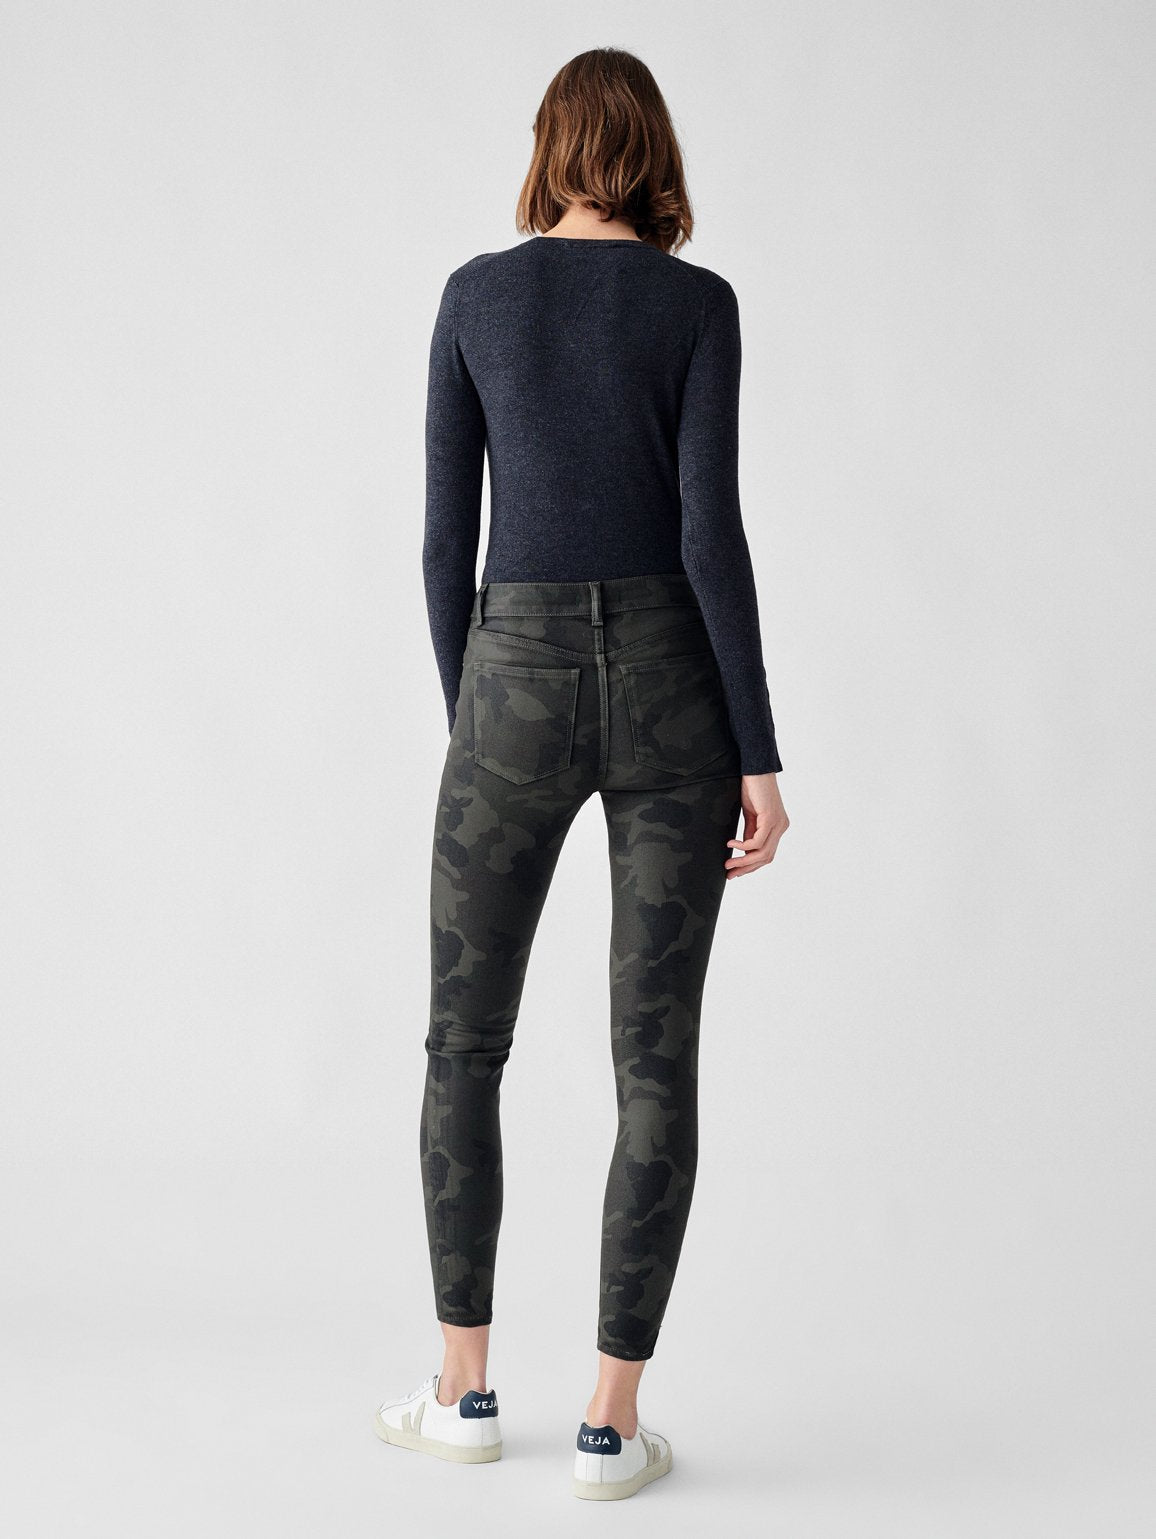 DL1961 - Florence Jeans - Camo